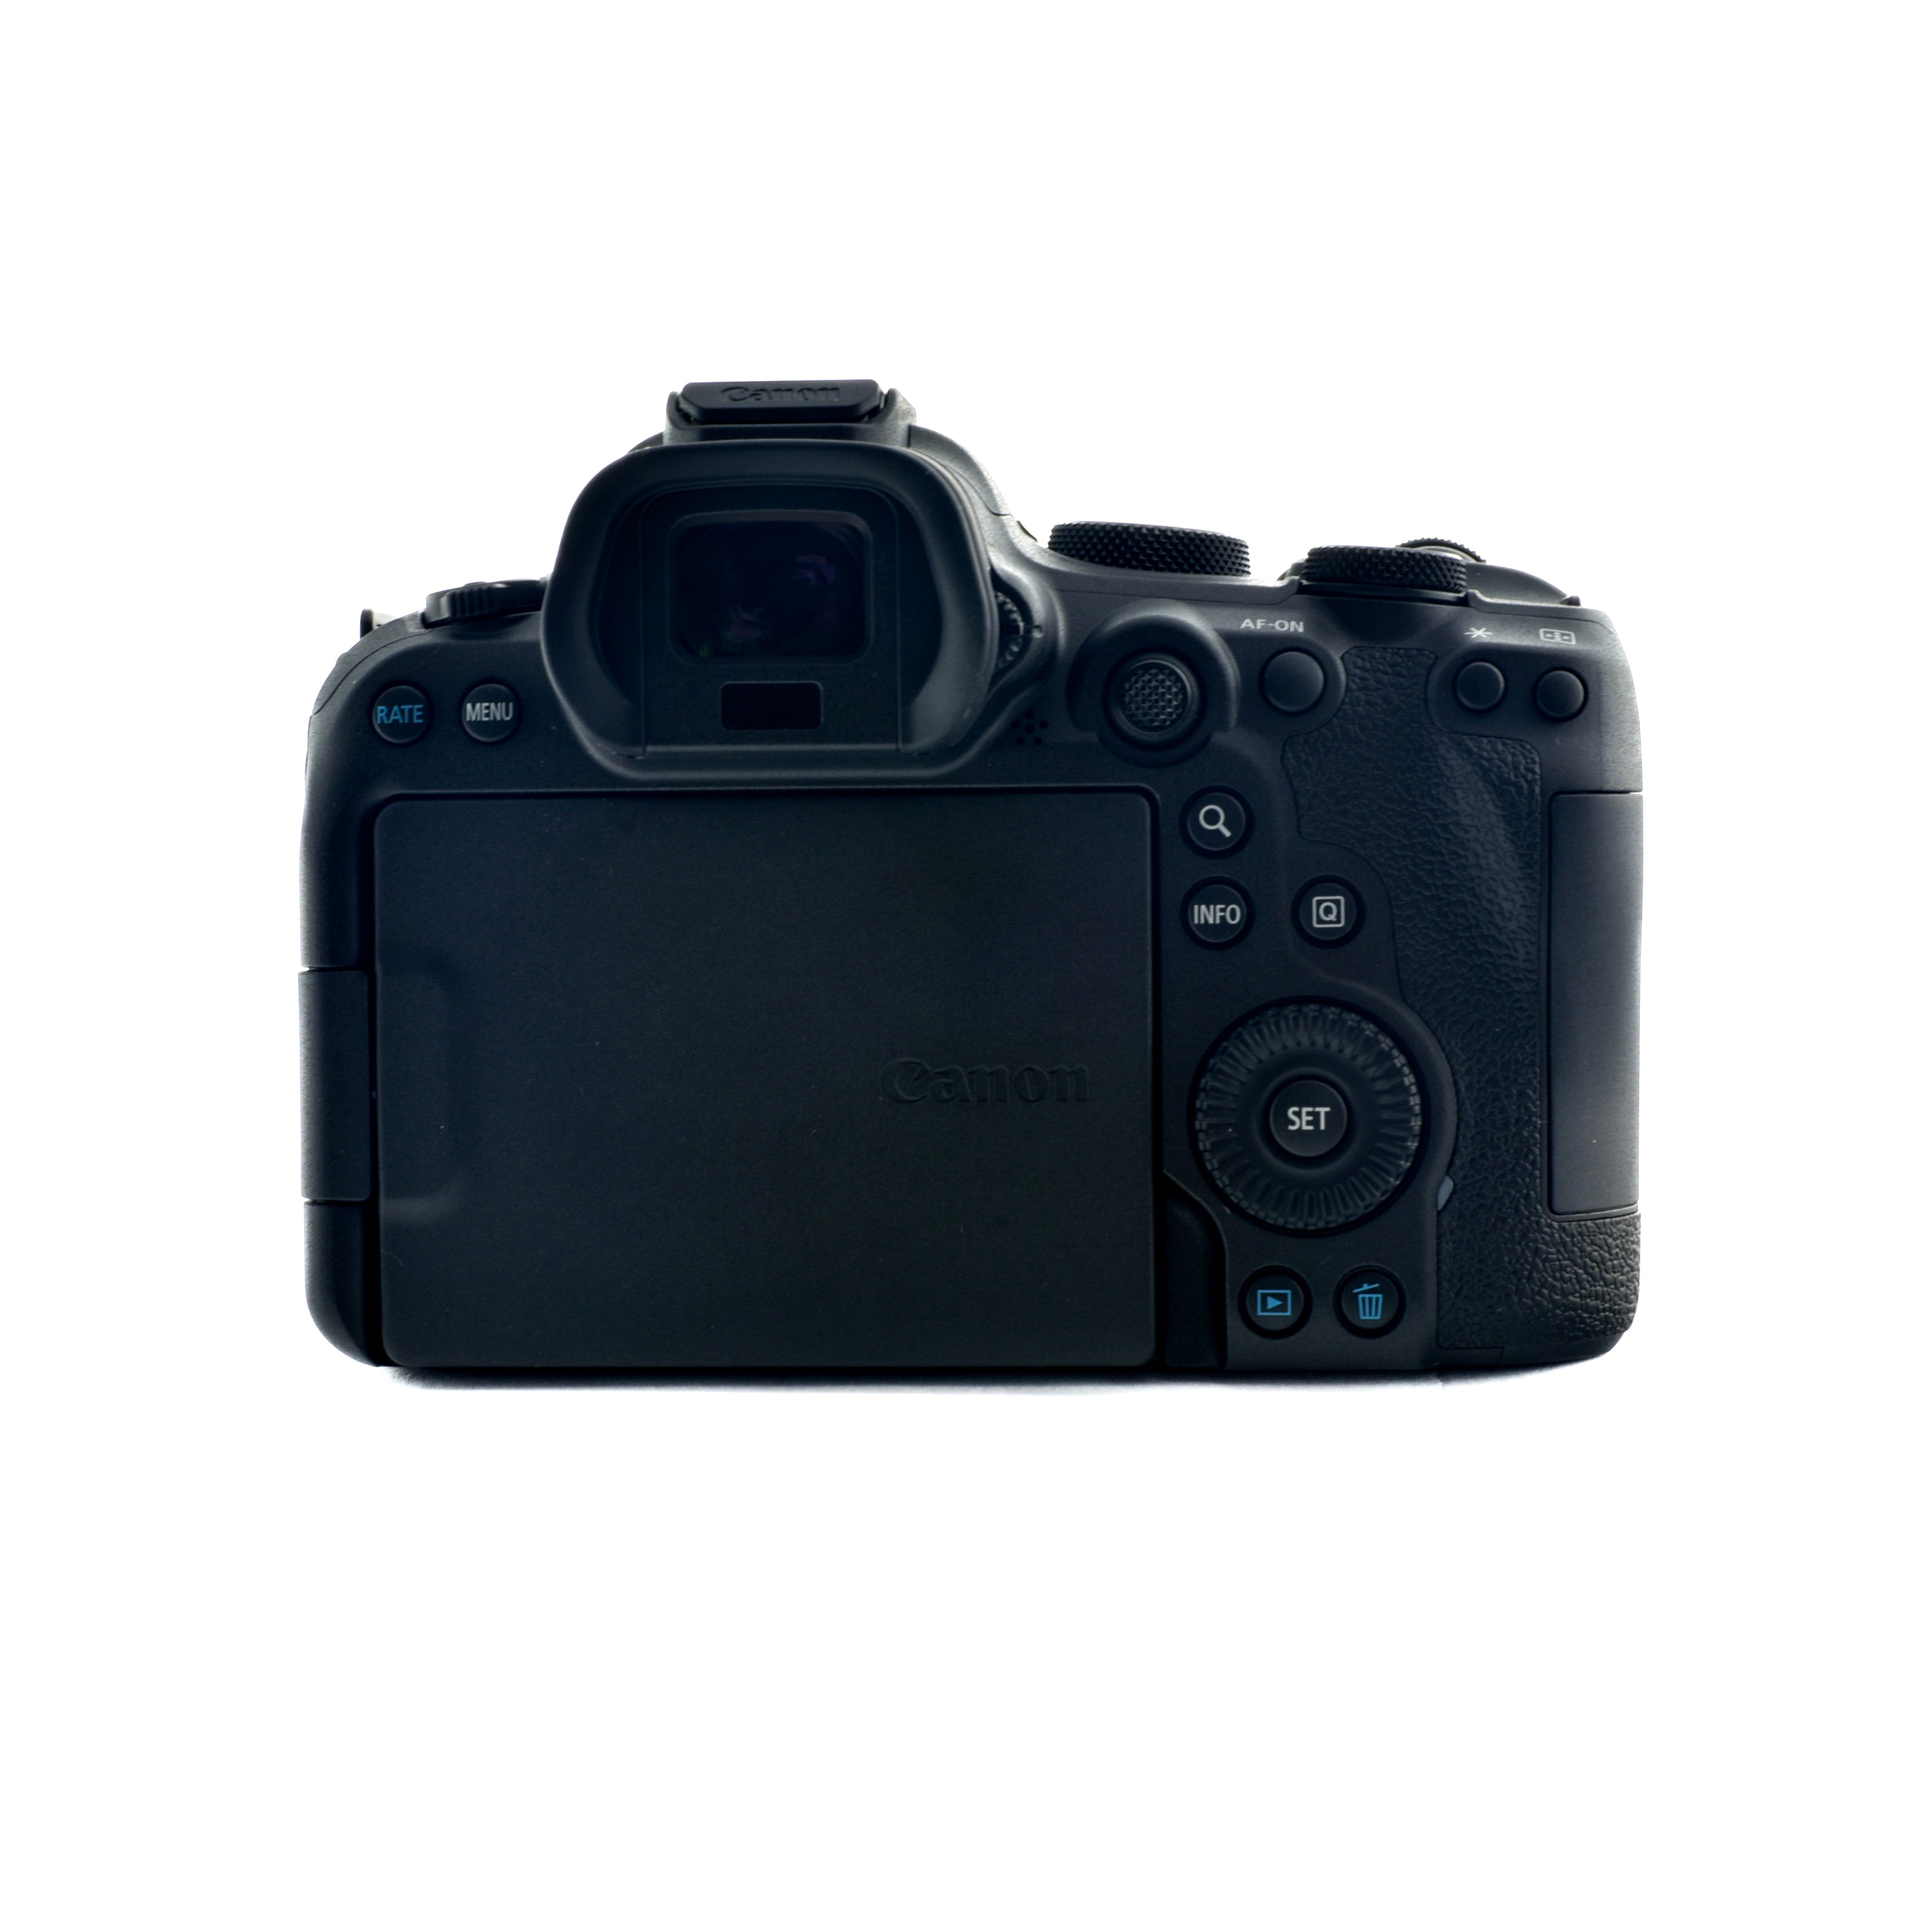 Canon Eos R6 mk ii Mirrorless Dslr Camera & 24-105mm f4 L IS USM lens